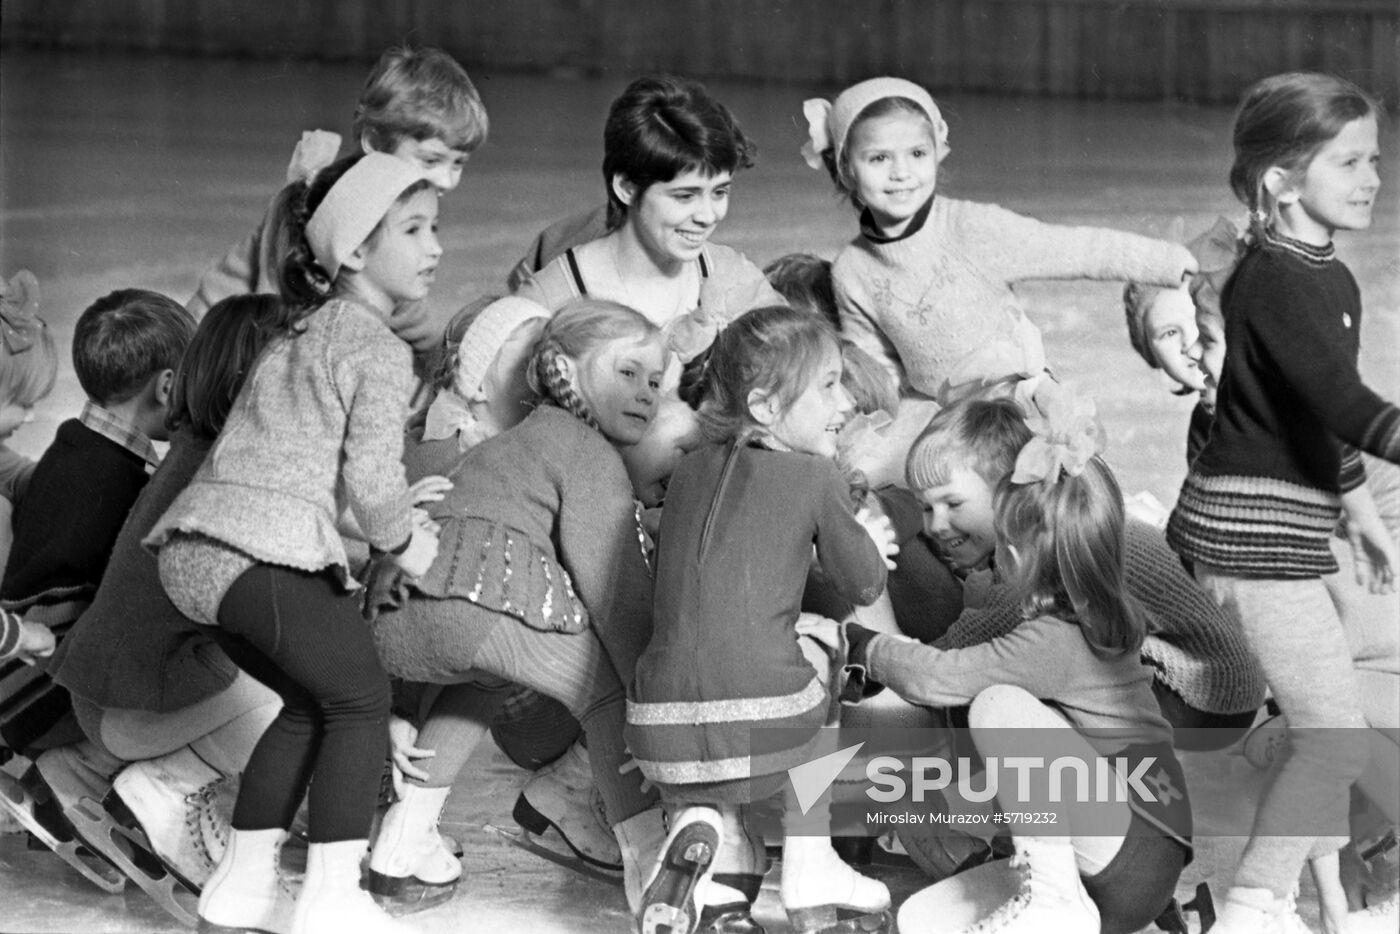 CSKA children's sports school in Moscow